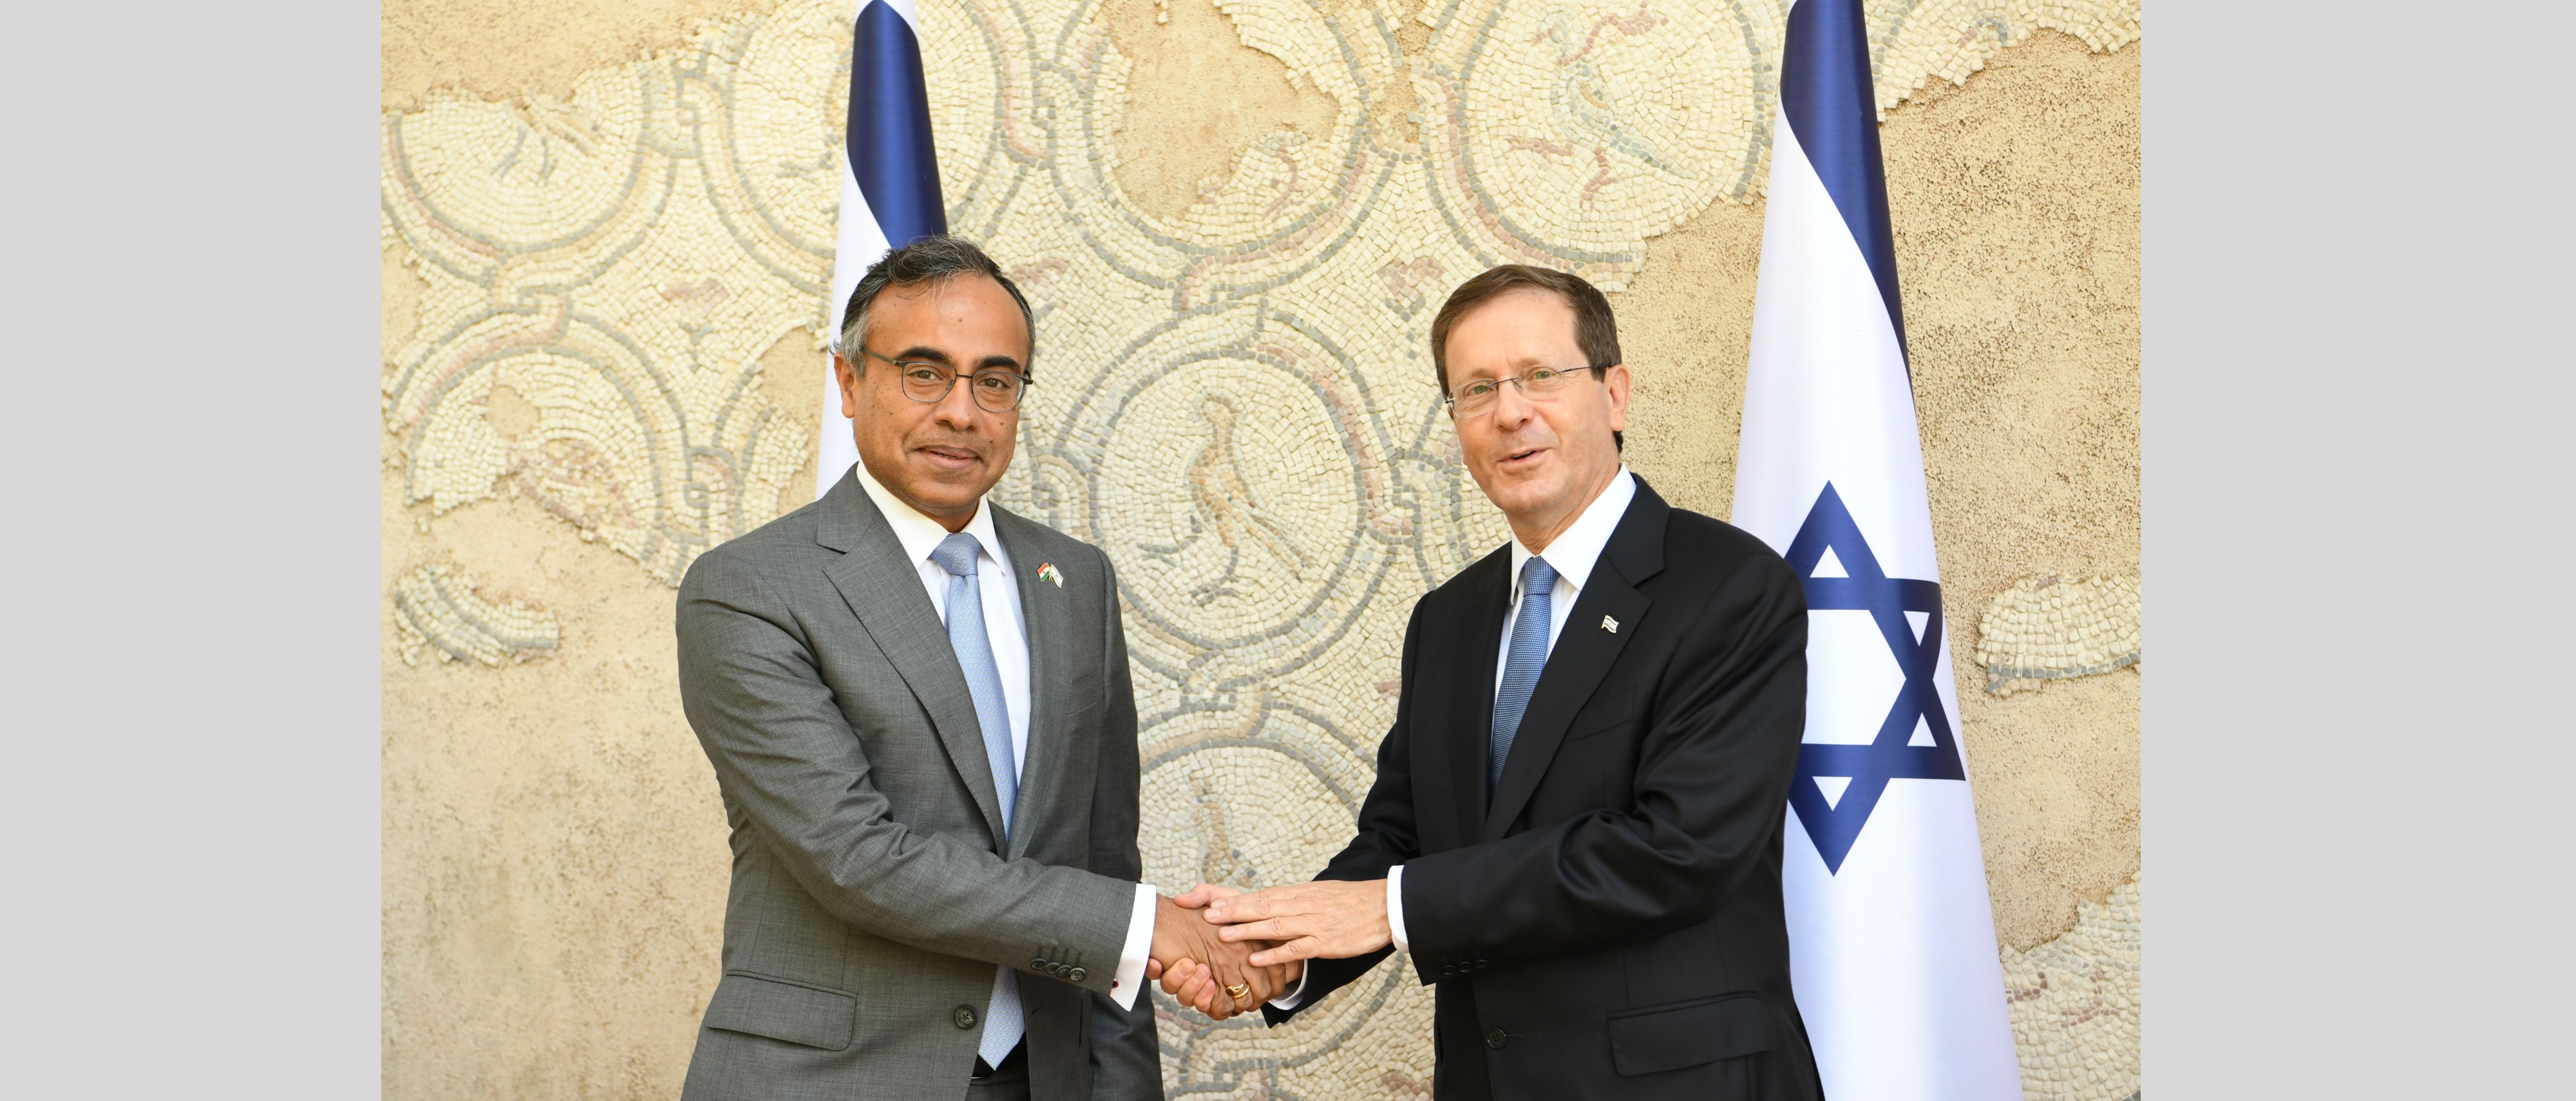  Ambassador attended the Rosh Hashana reception hosted by President Herzog in Jerusalem.